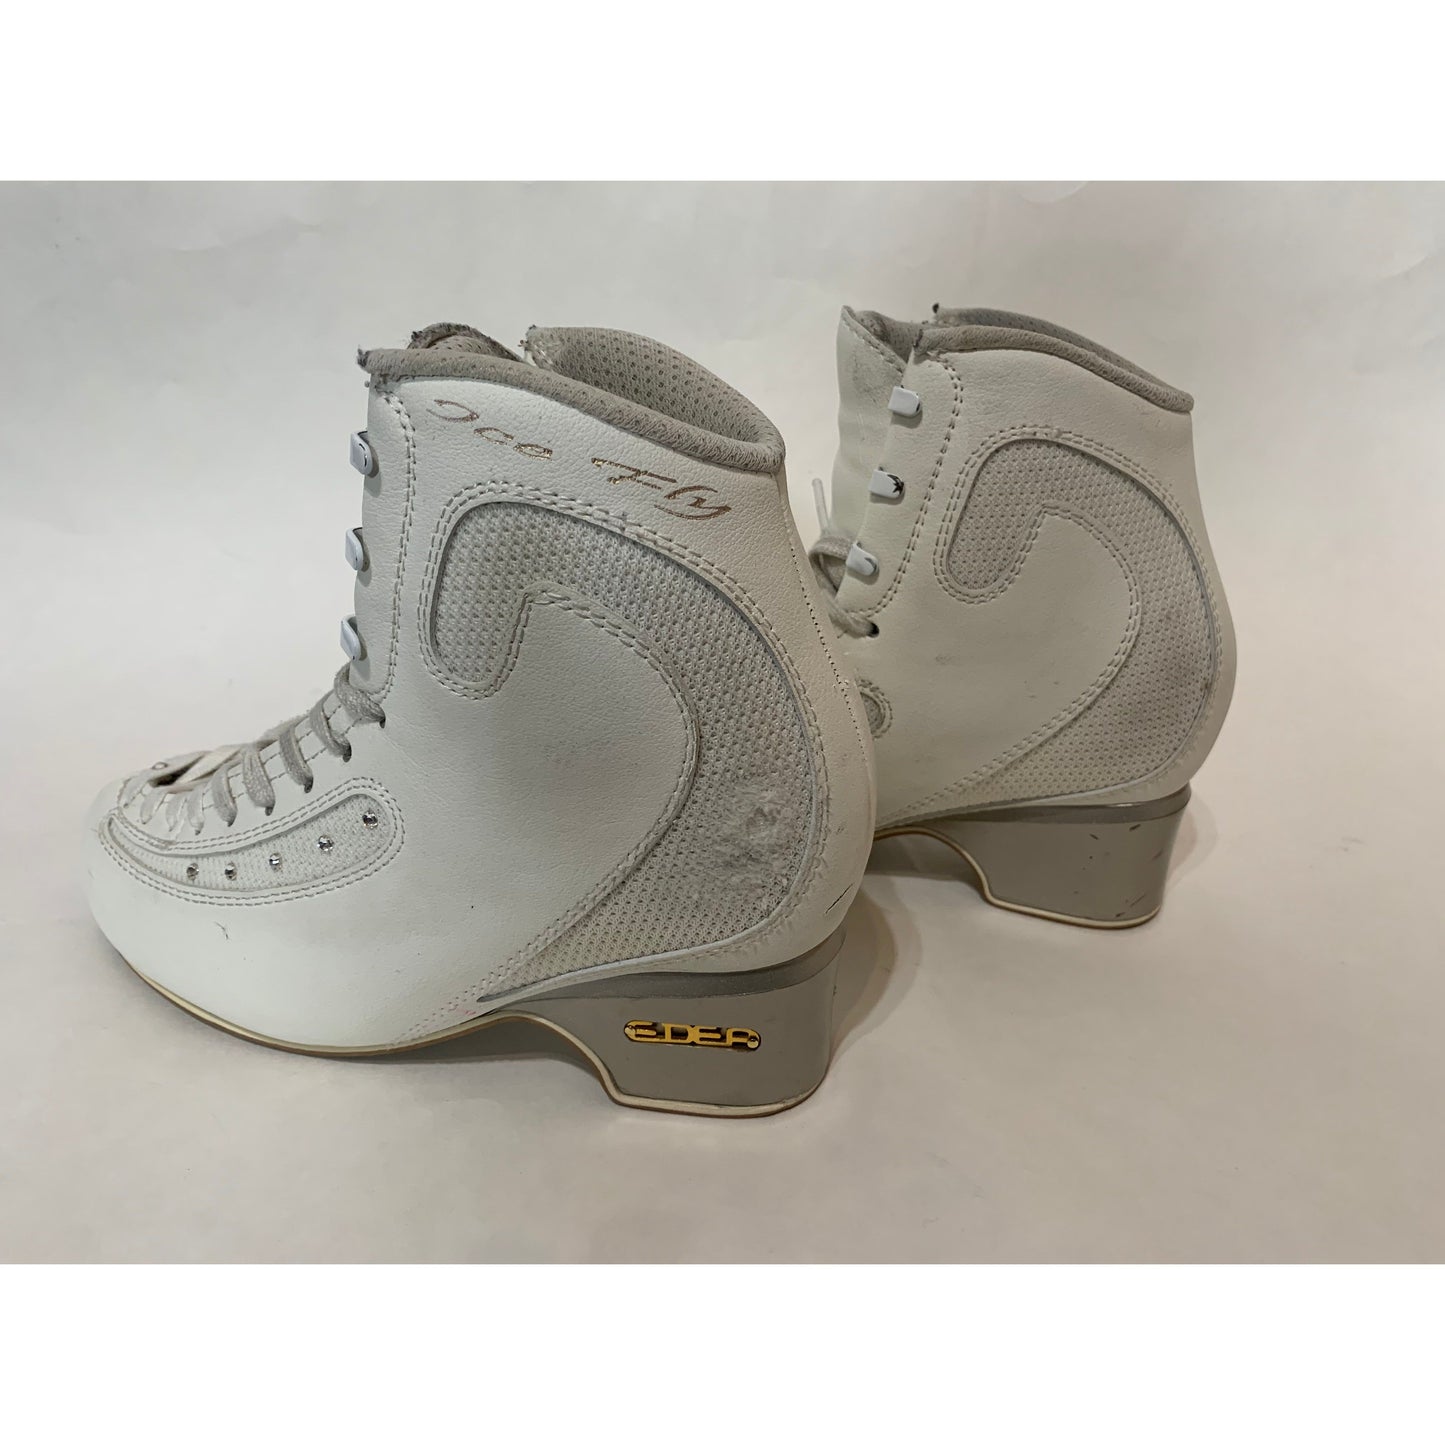 Used Edea Ice Fly Boots 230 C - The Sharper Edge Skates